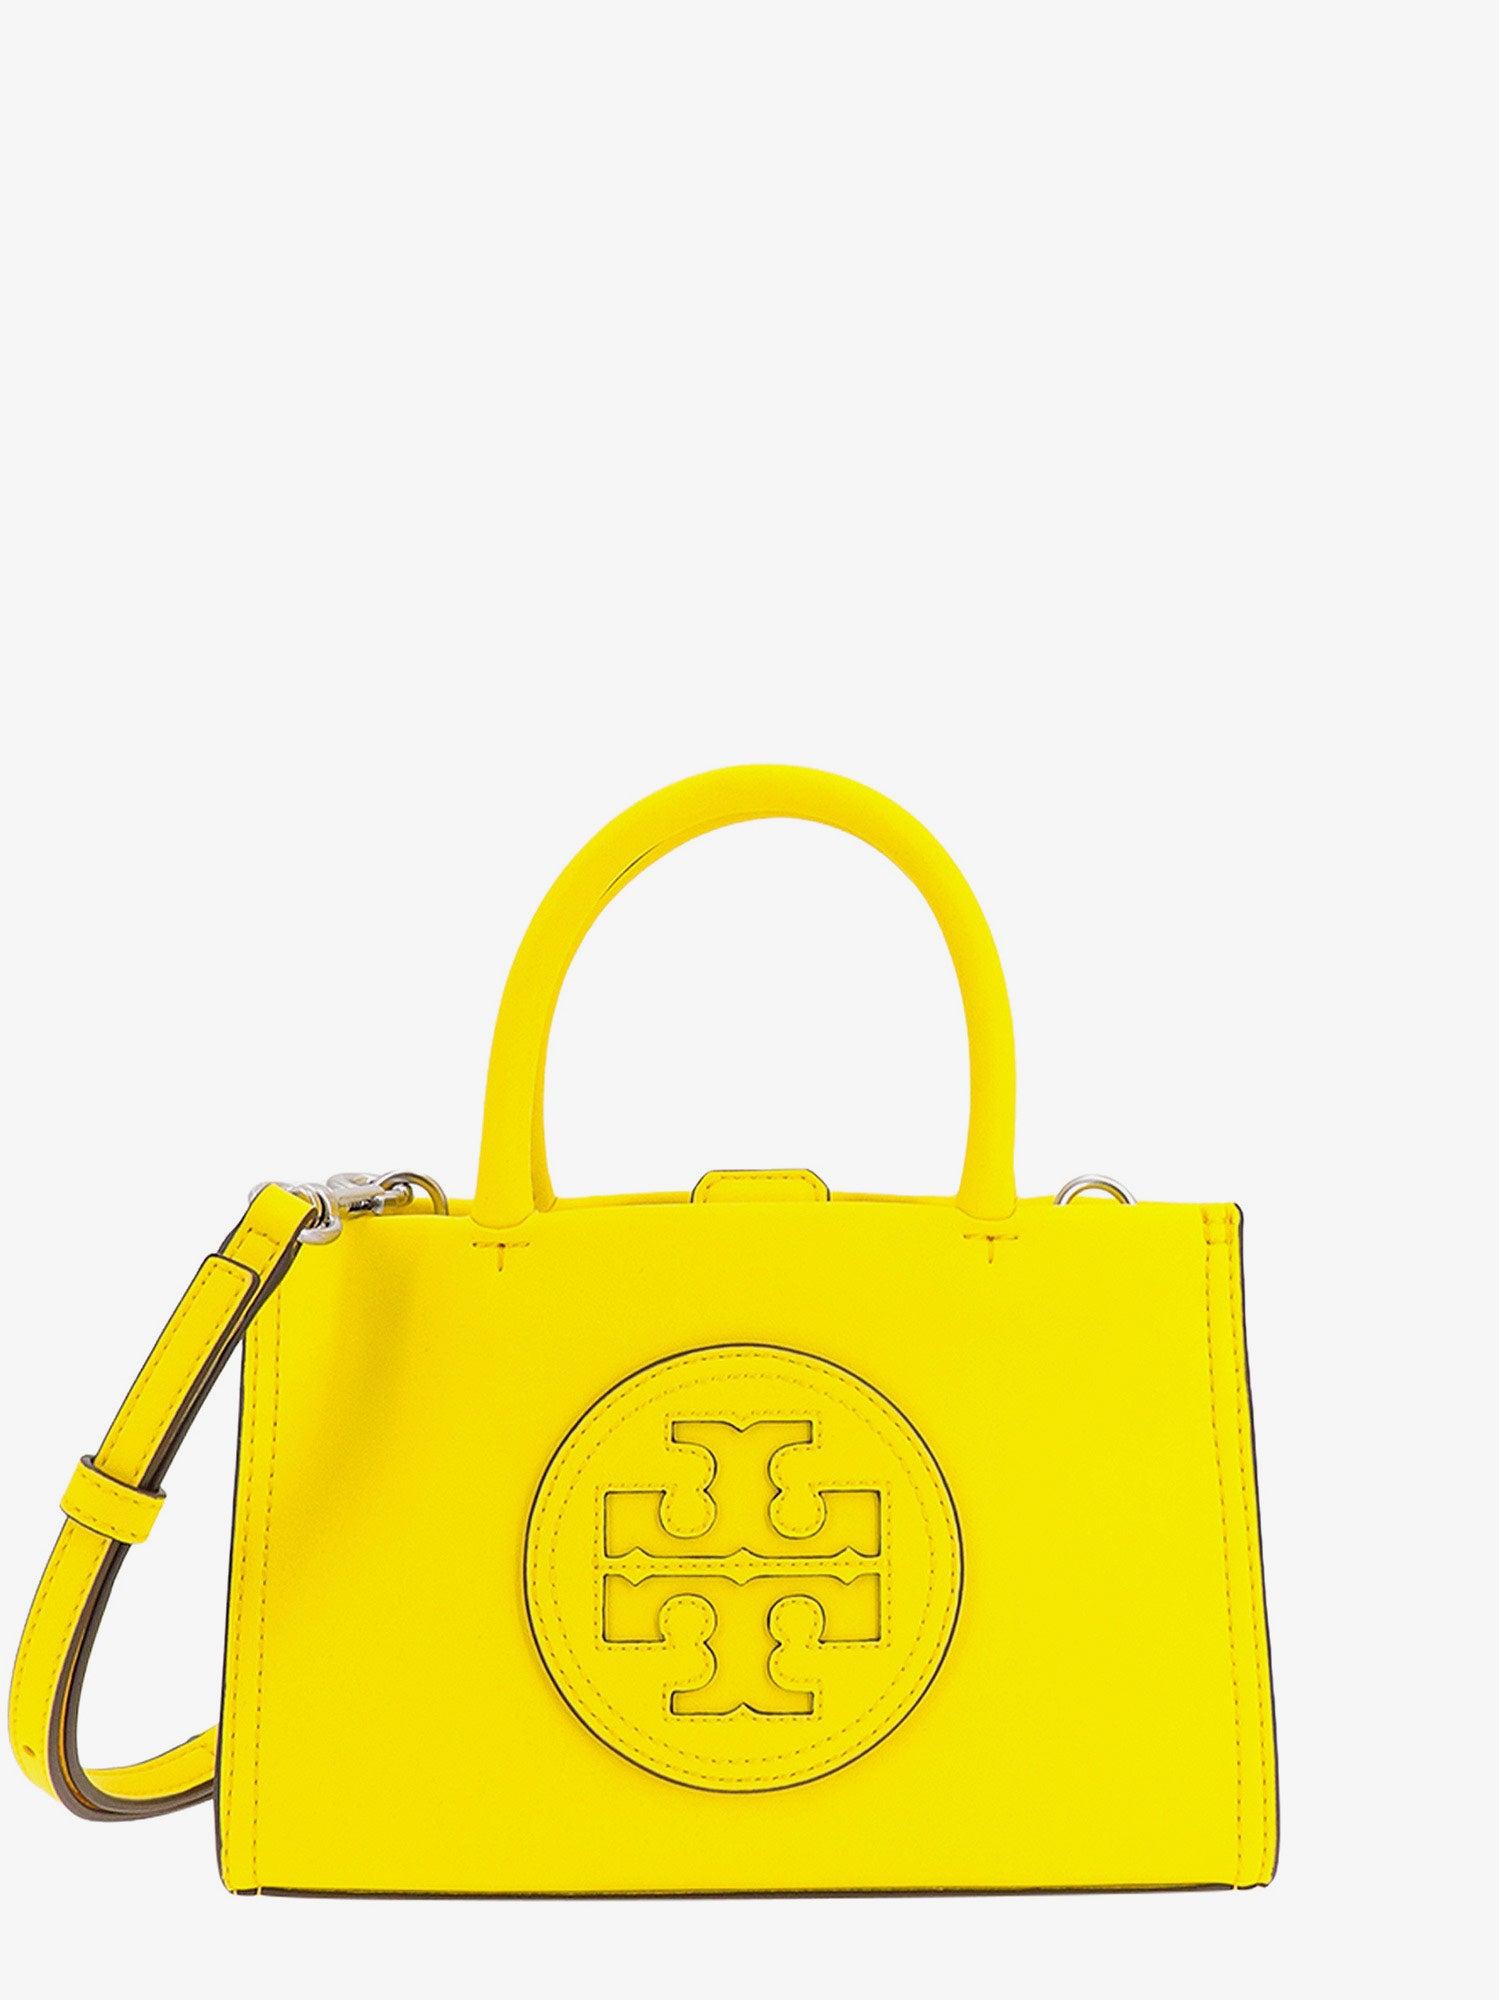 Tory Burch Handbag in Yellow | Lyst